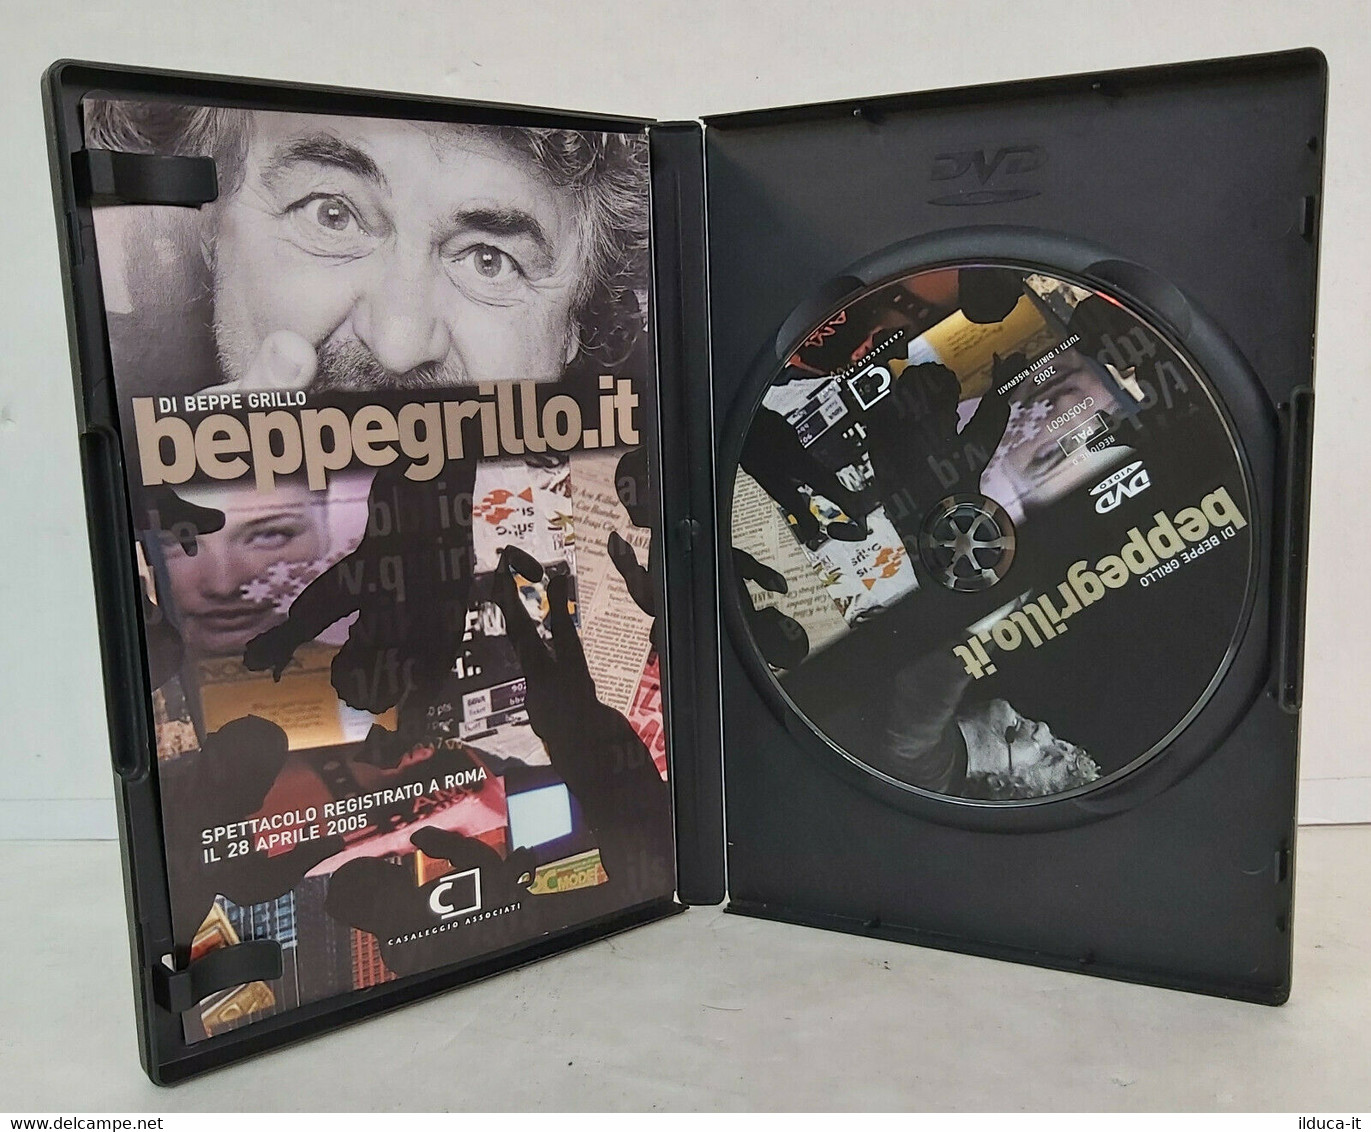 00334 DVD - Beppegrillo.it - Casaleggio 2005 - Documentary